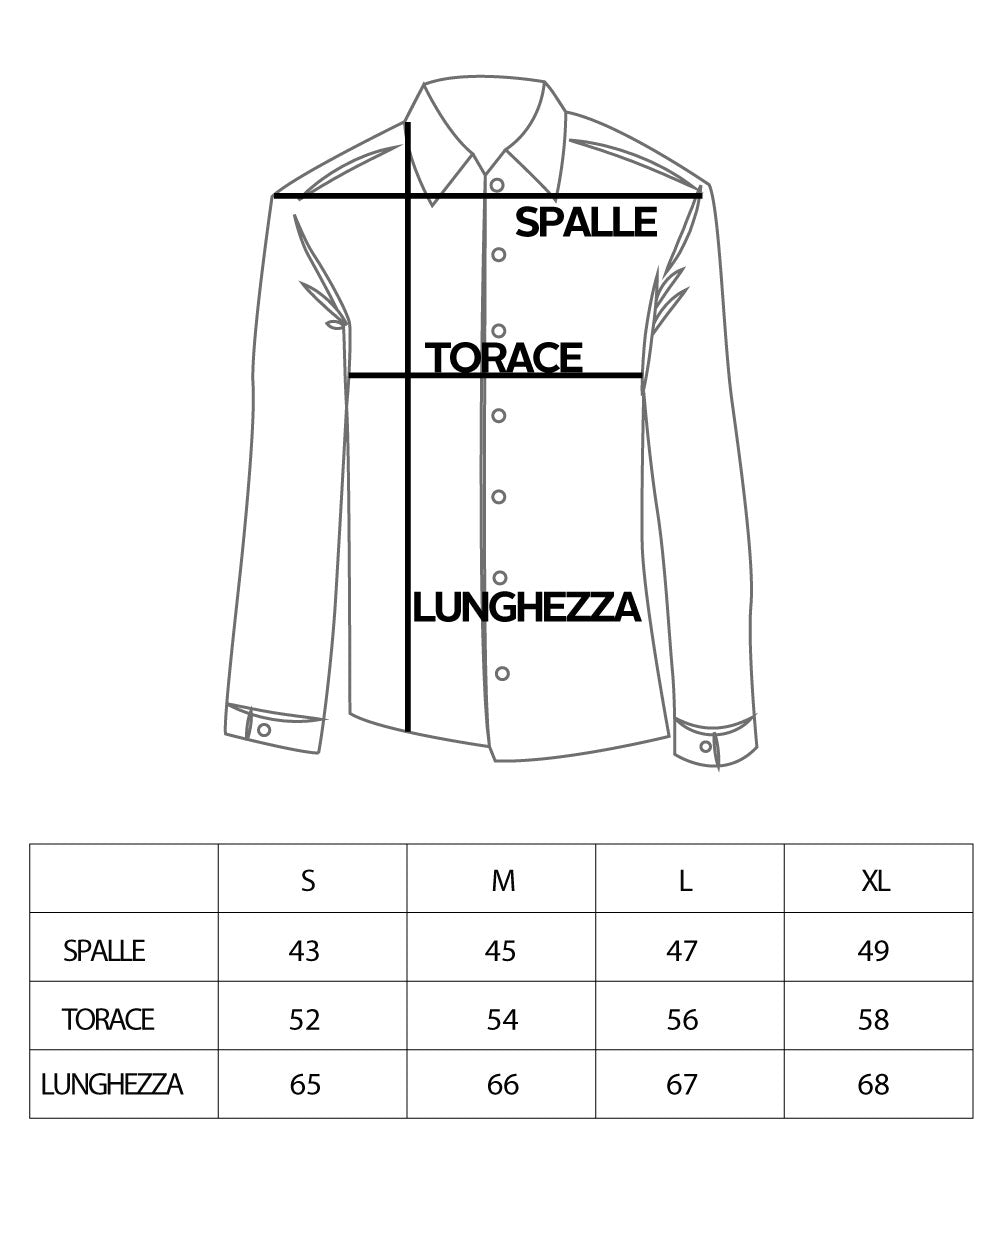 Men's Mandarin Collar Long Sleeve Striped Cotton Shirt Black GIOSAL-C2337A